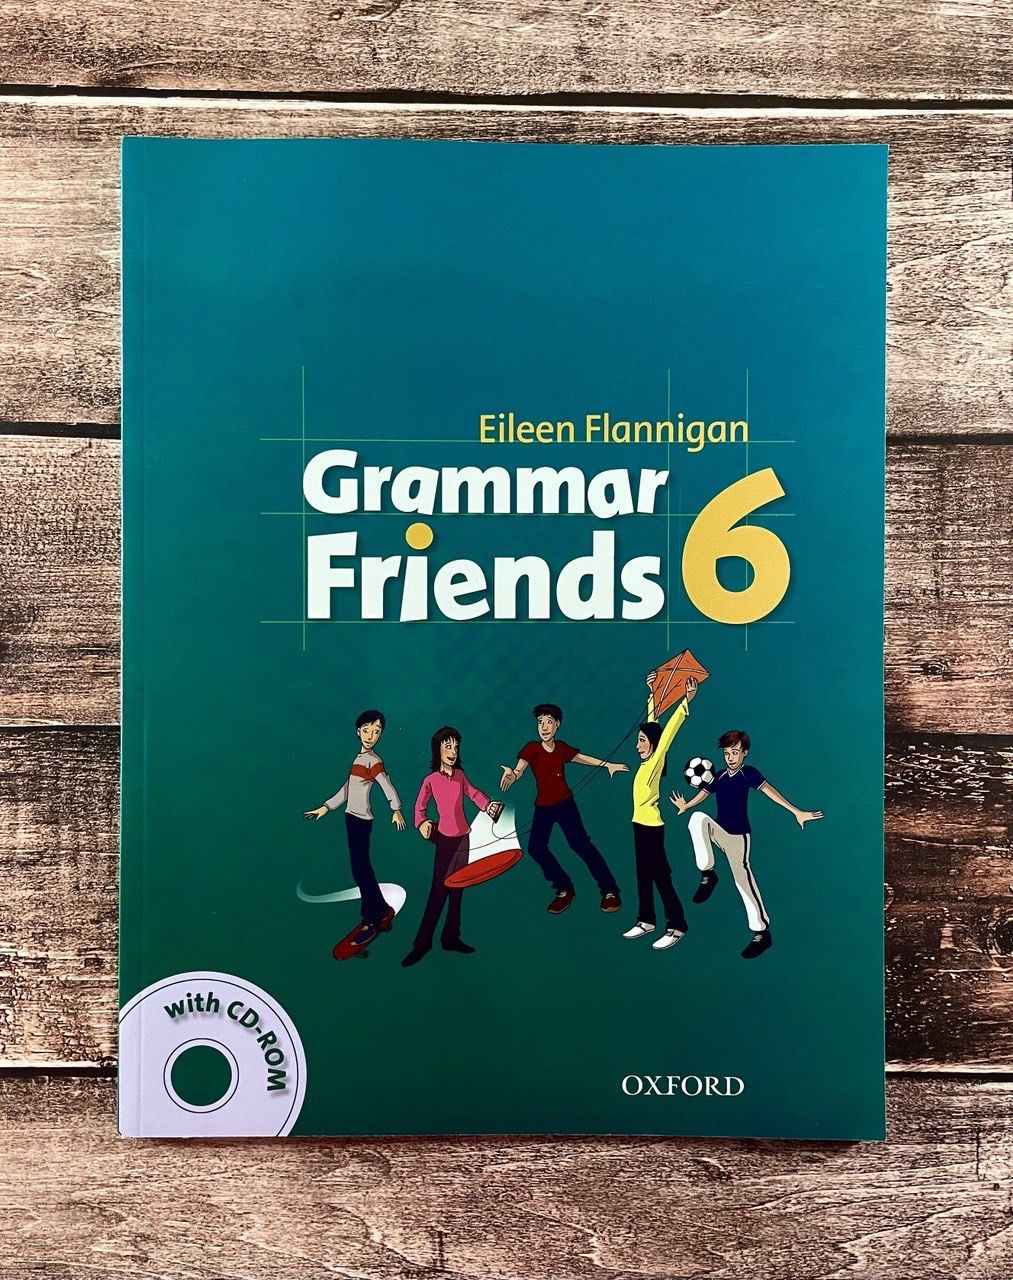 My grammar friends. Grammar friends 2. Grammar book. Grammar book талисман. Книги учебник векоре.